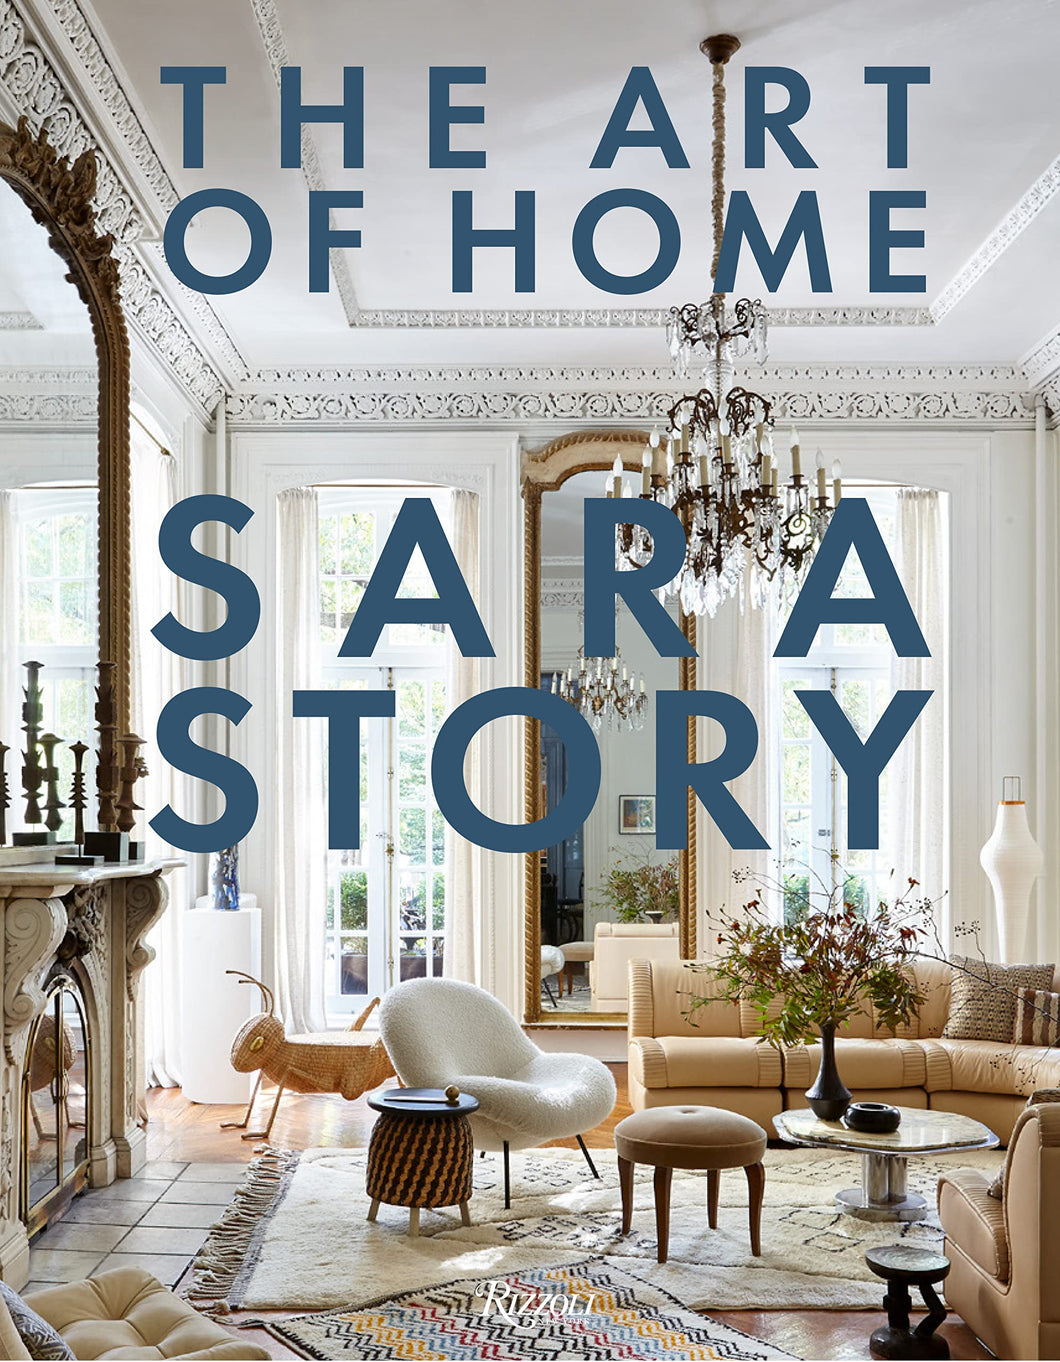 Art of Home: Sara Story